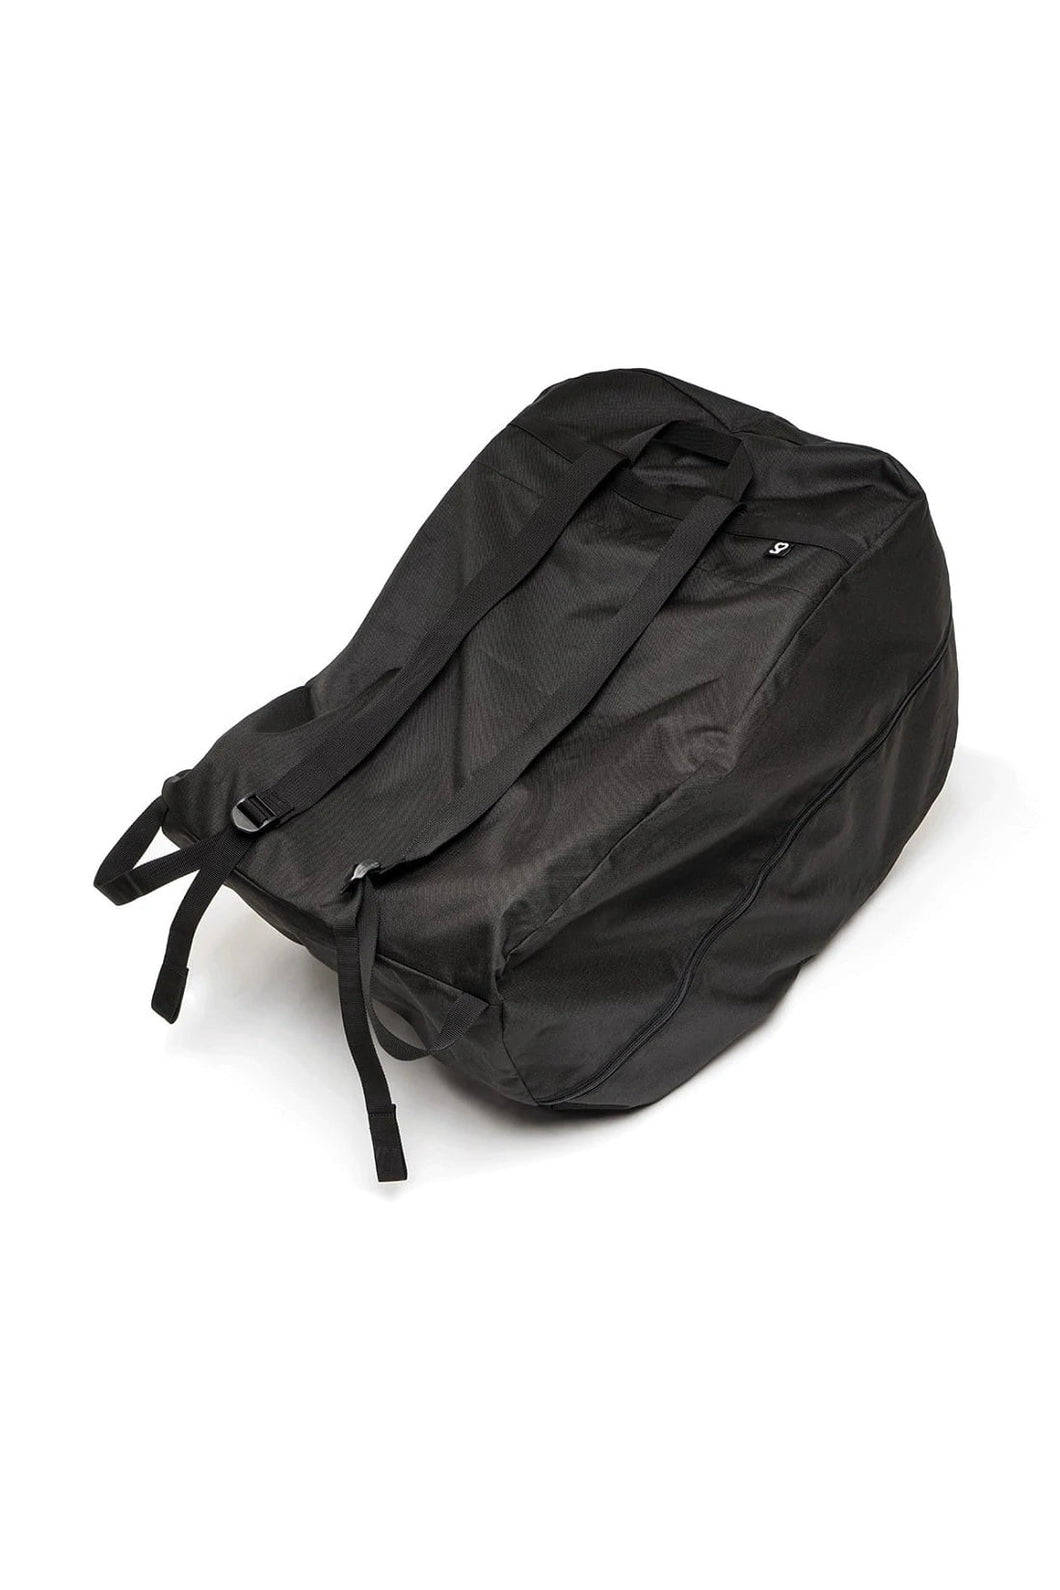 Doona Travel Bag Black